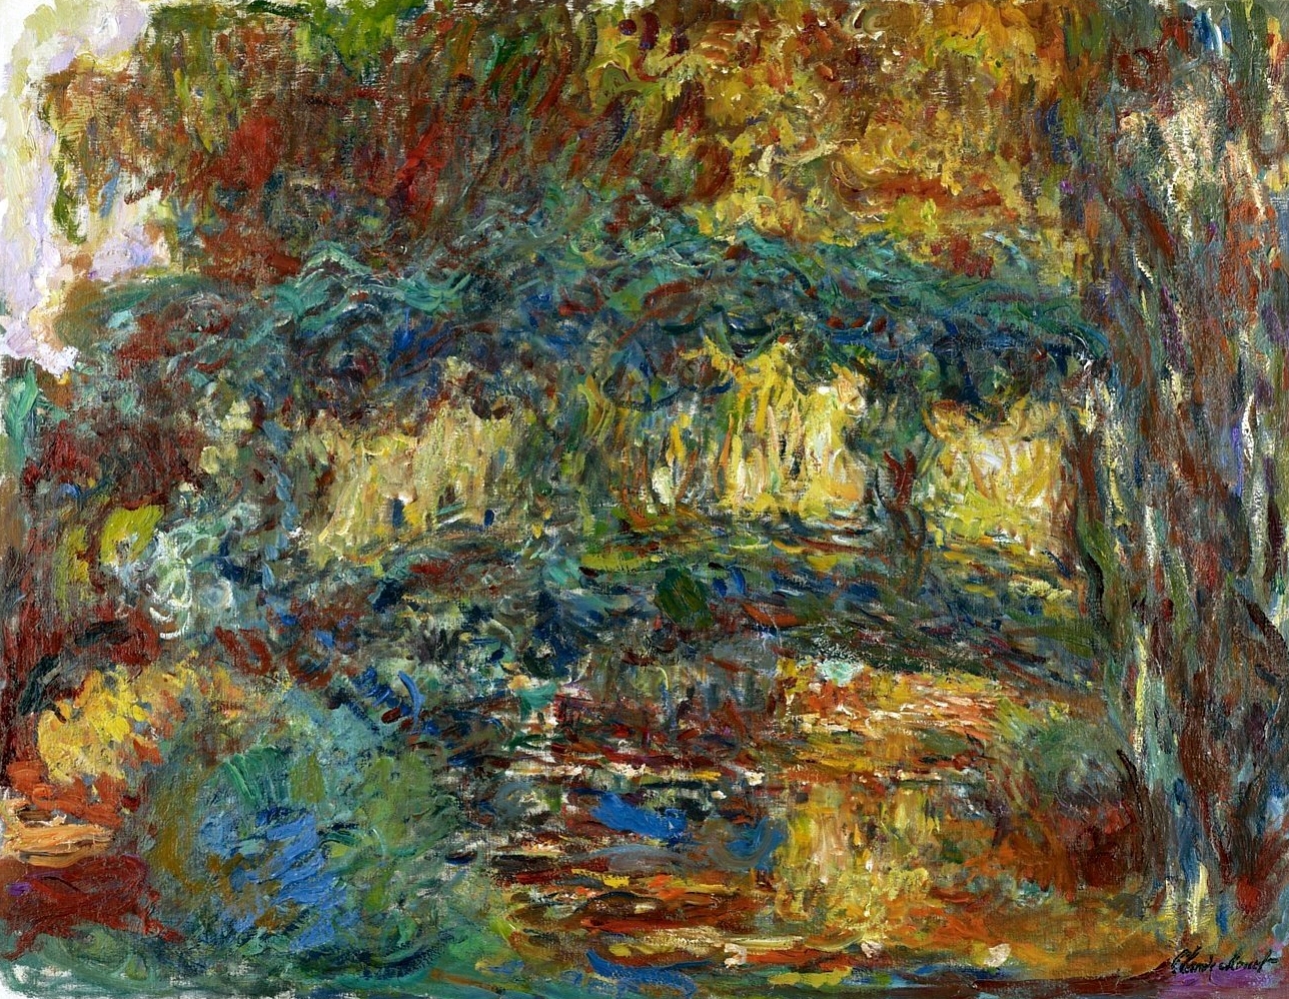 Claude+Monet-1840-1926 (467).jpg